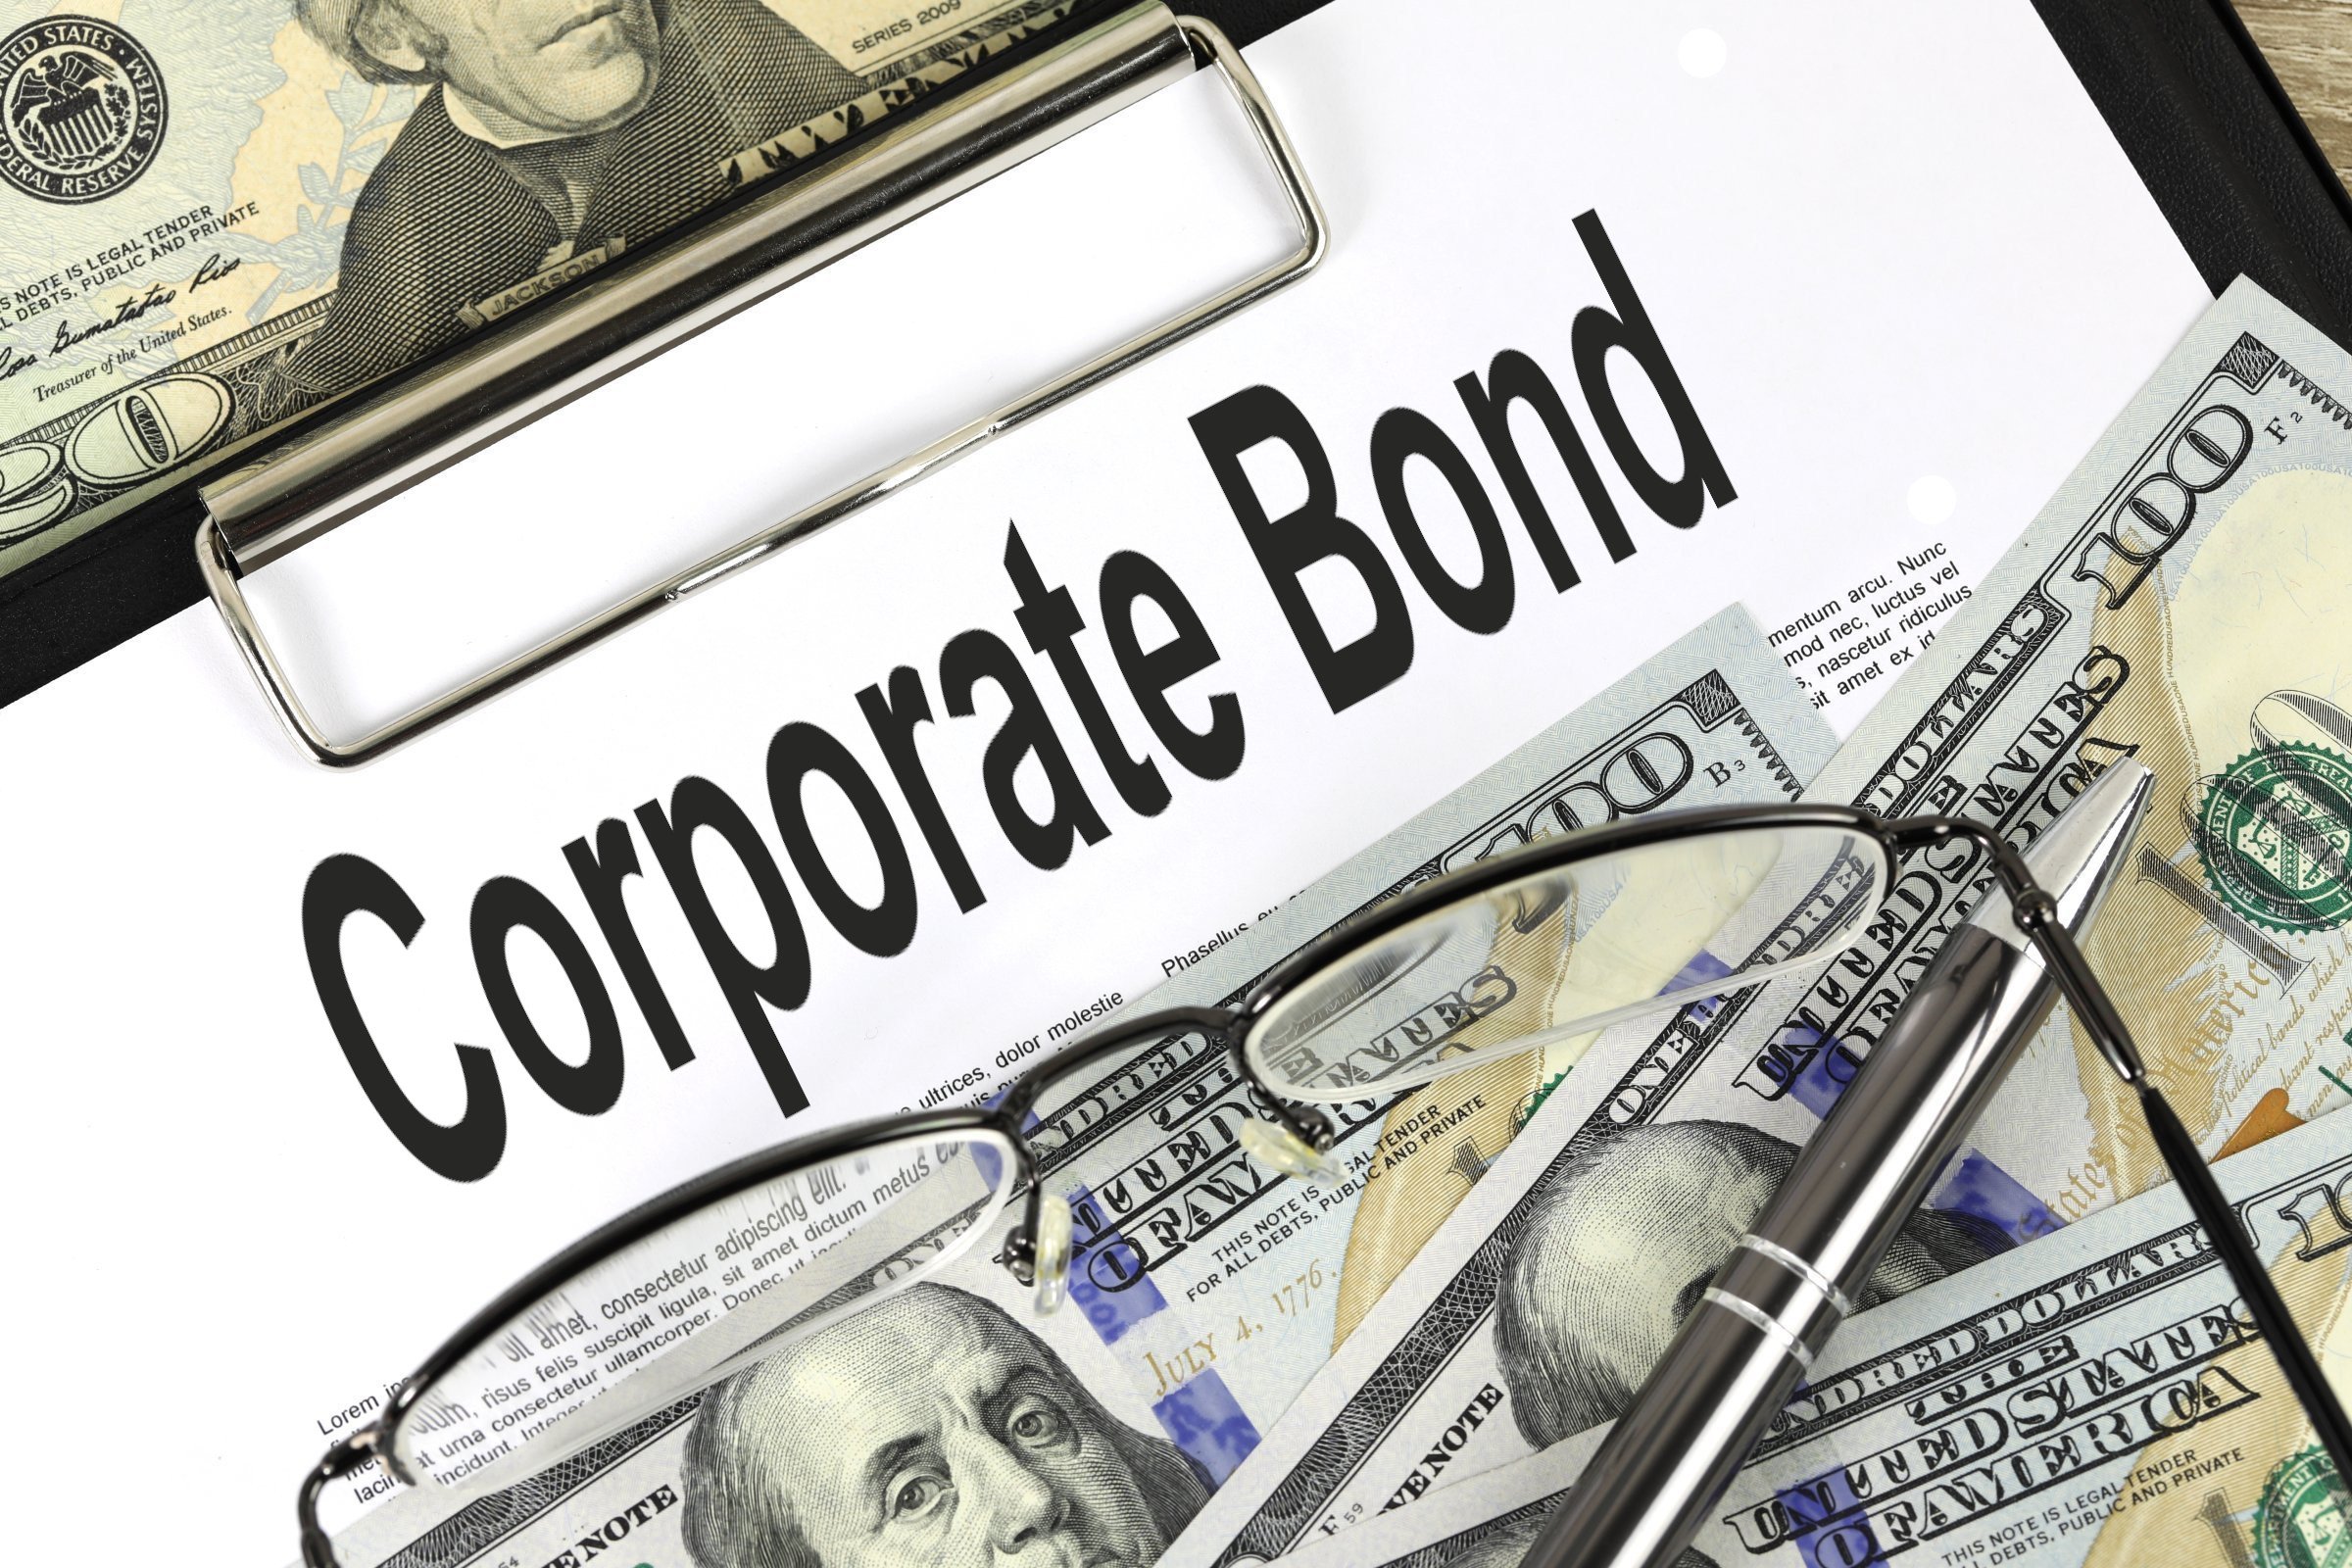 corporate bond